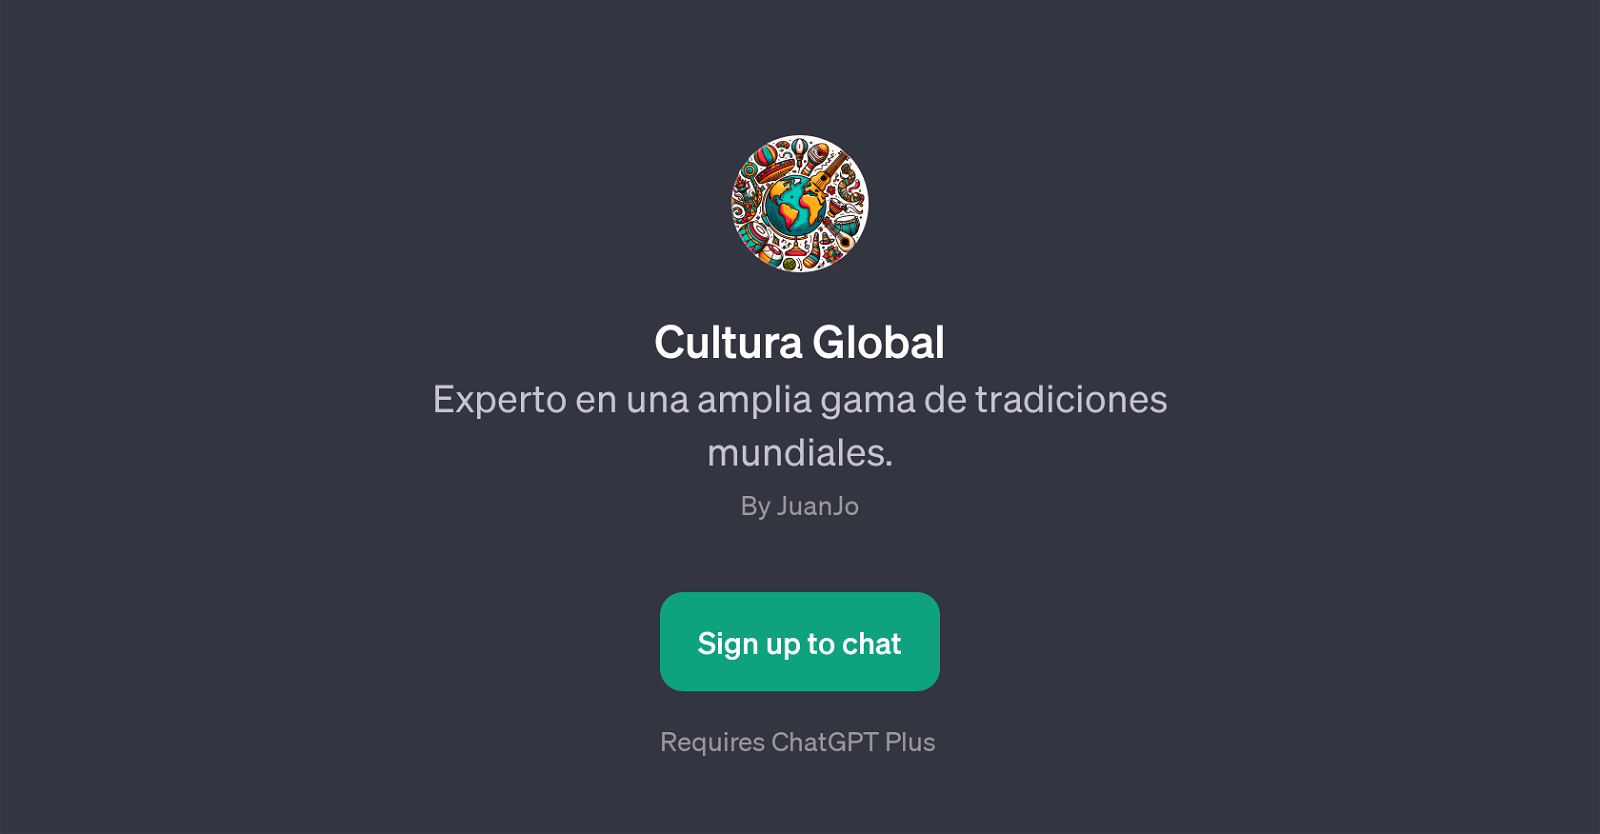 Cultura Global website